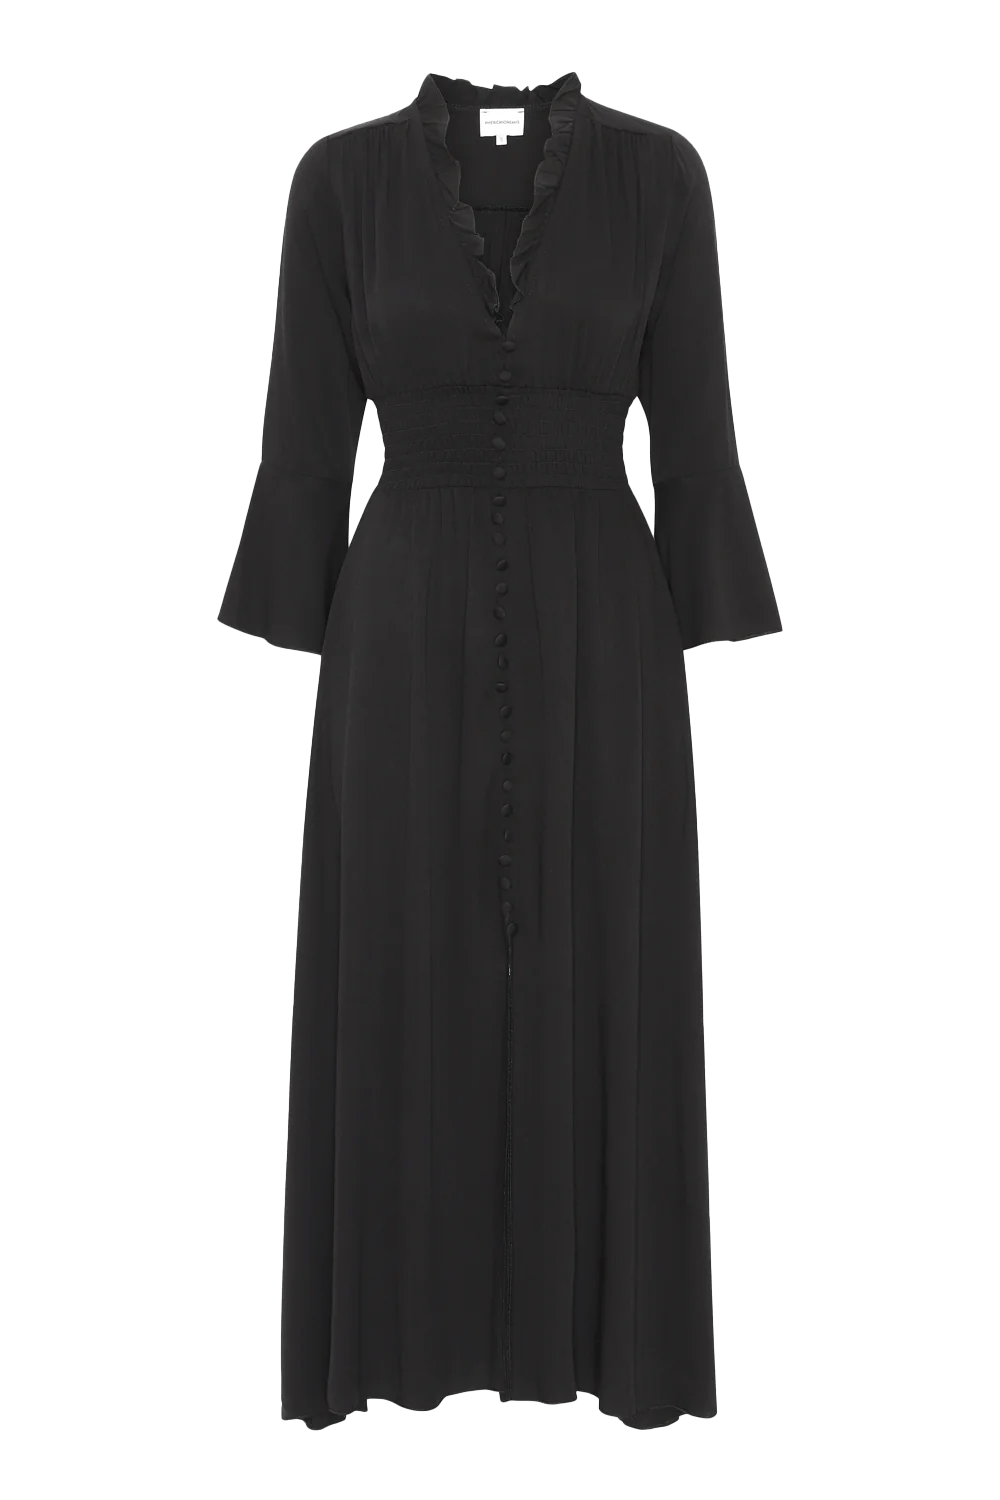 AmericanDreams Sally Long Dress in Black